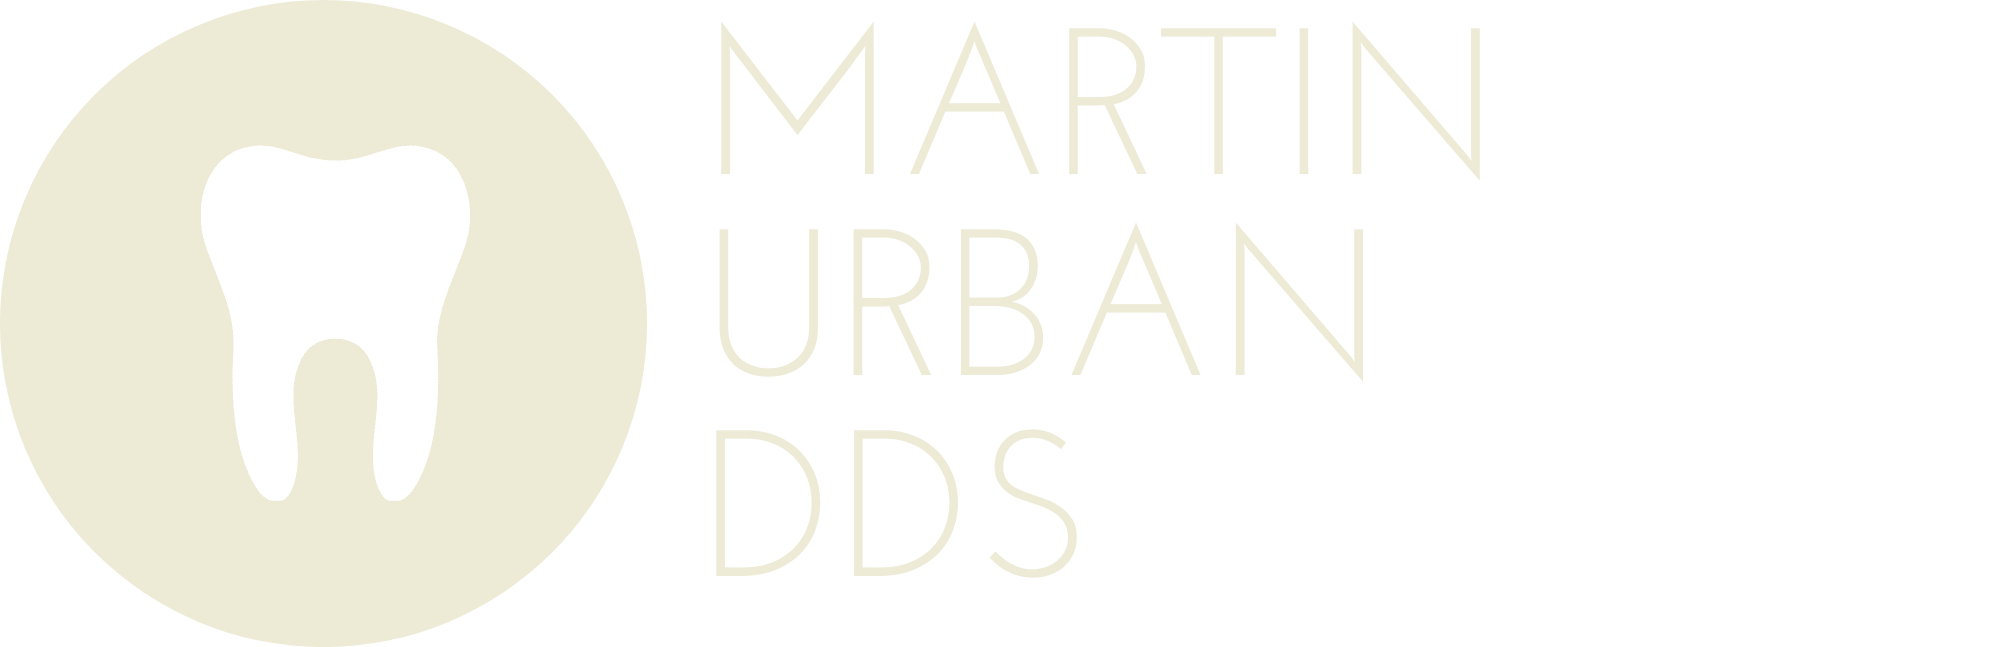 Martin Urban DDS | Lifestyle